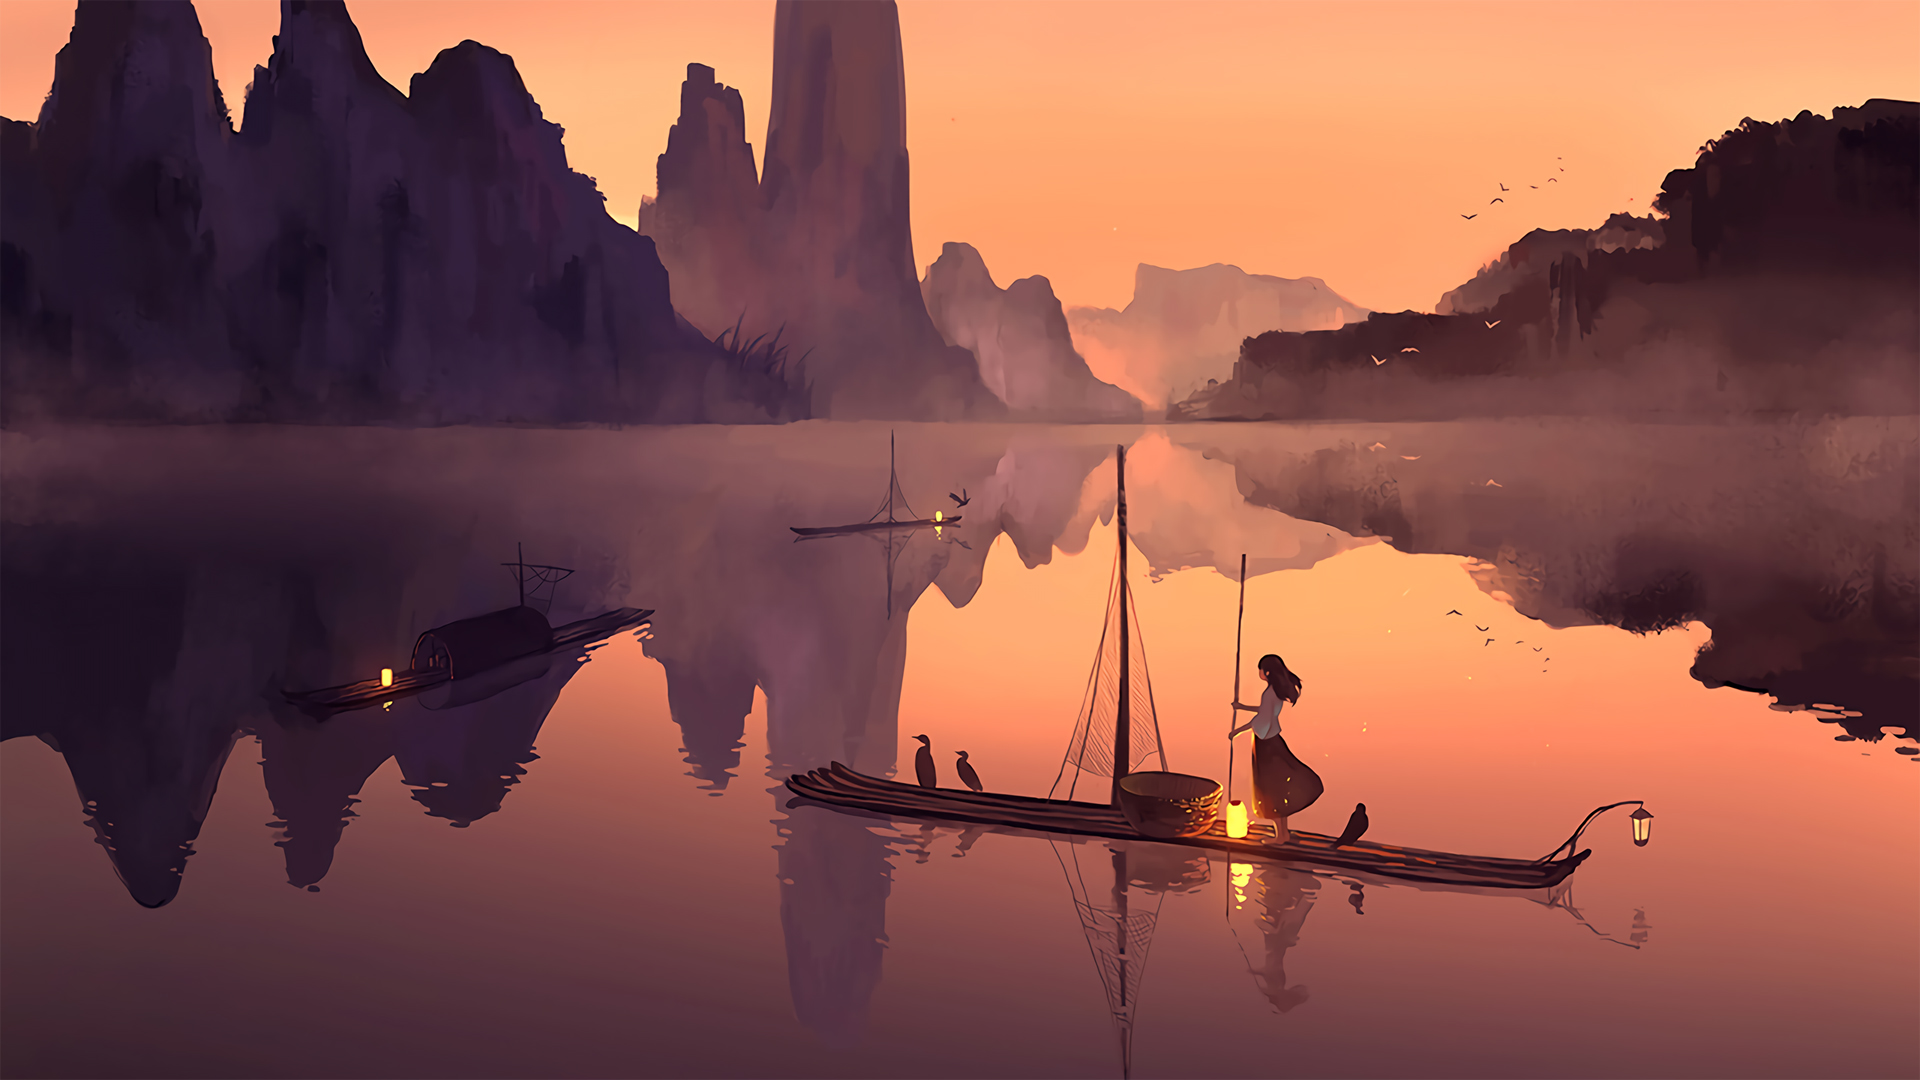 <span style='color:red;'>落日</span>下 山水湖泊中 一个划着竹排的渔家少女唯美动漫手绘壁纸图片 黄昏